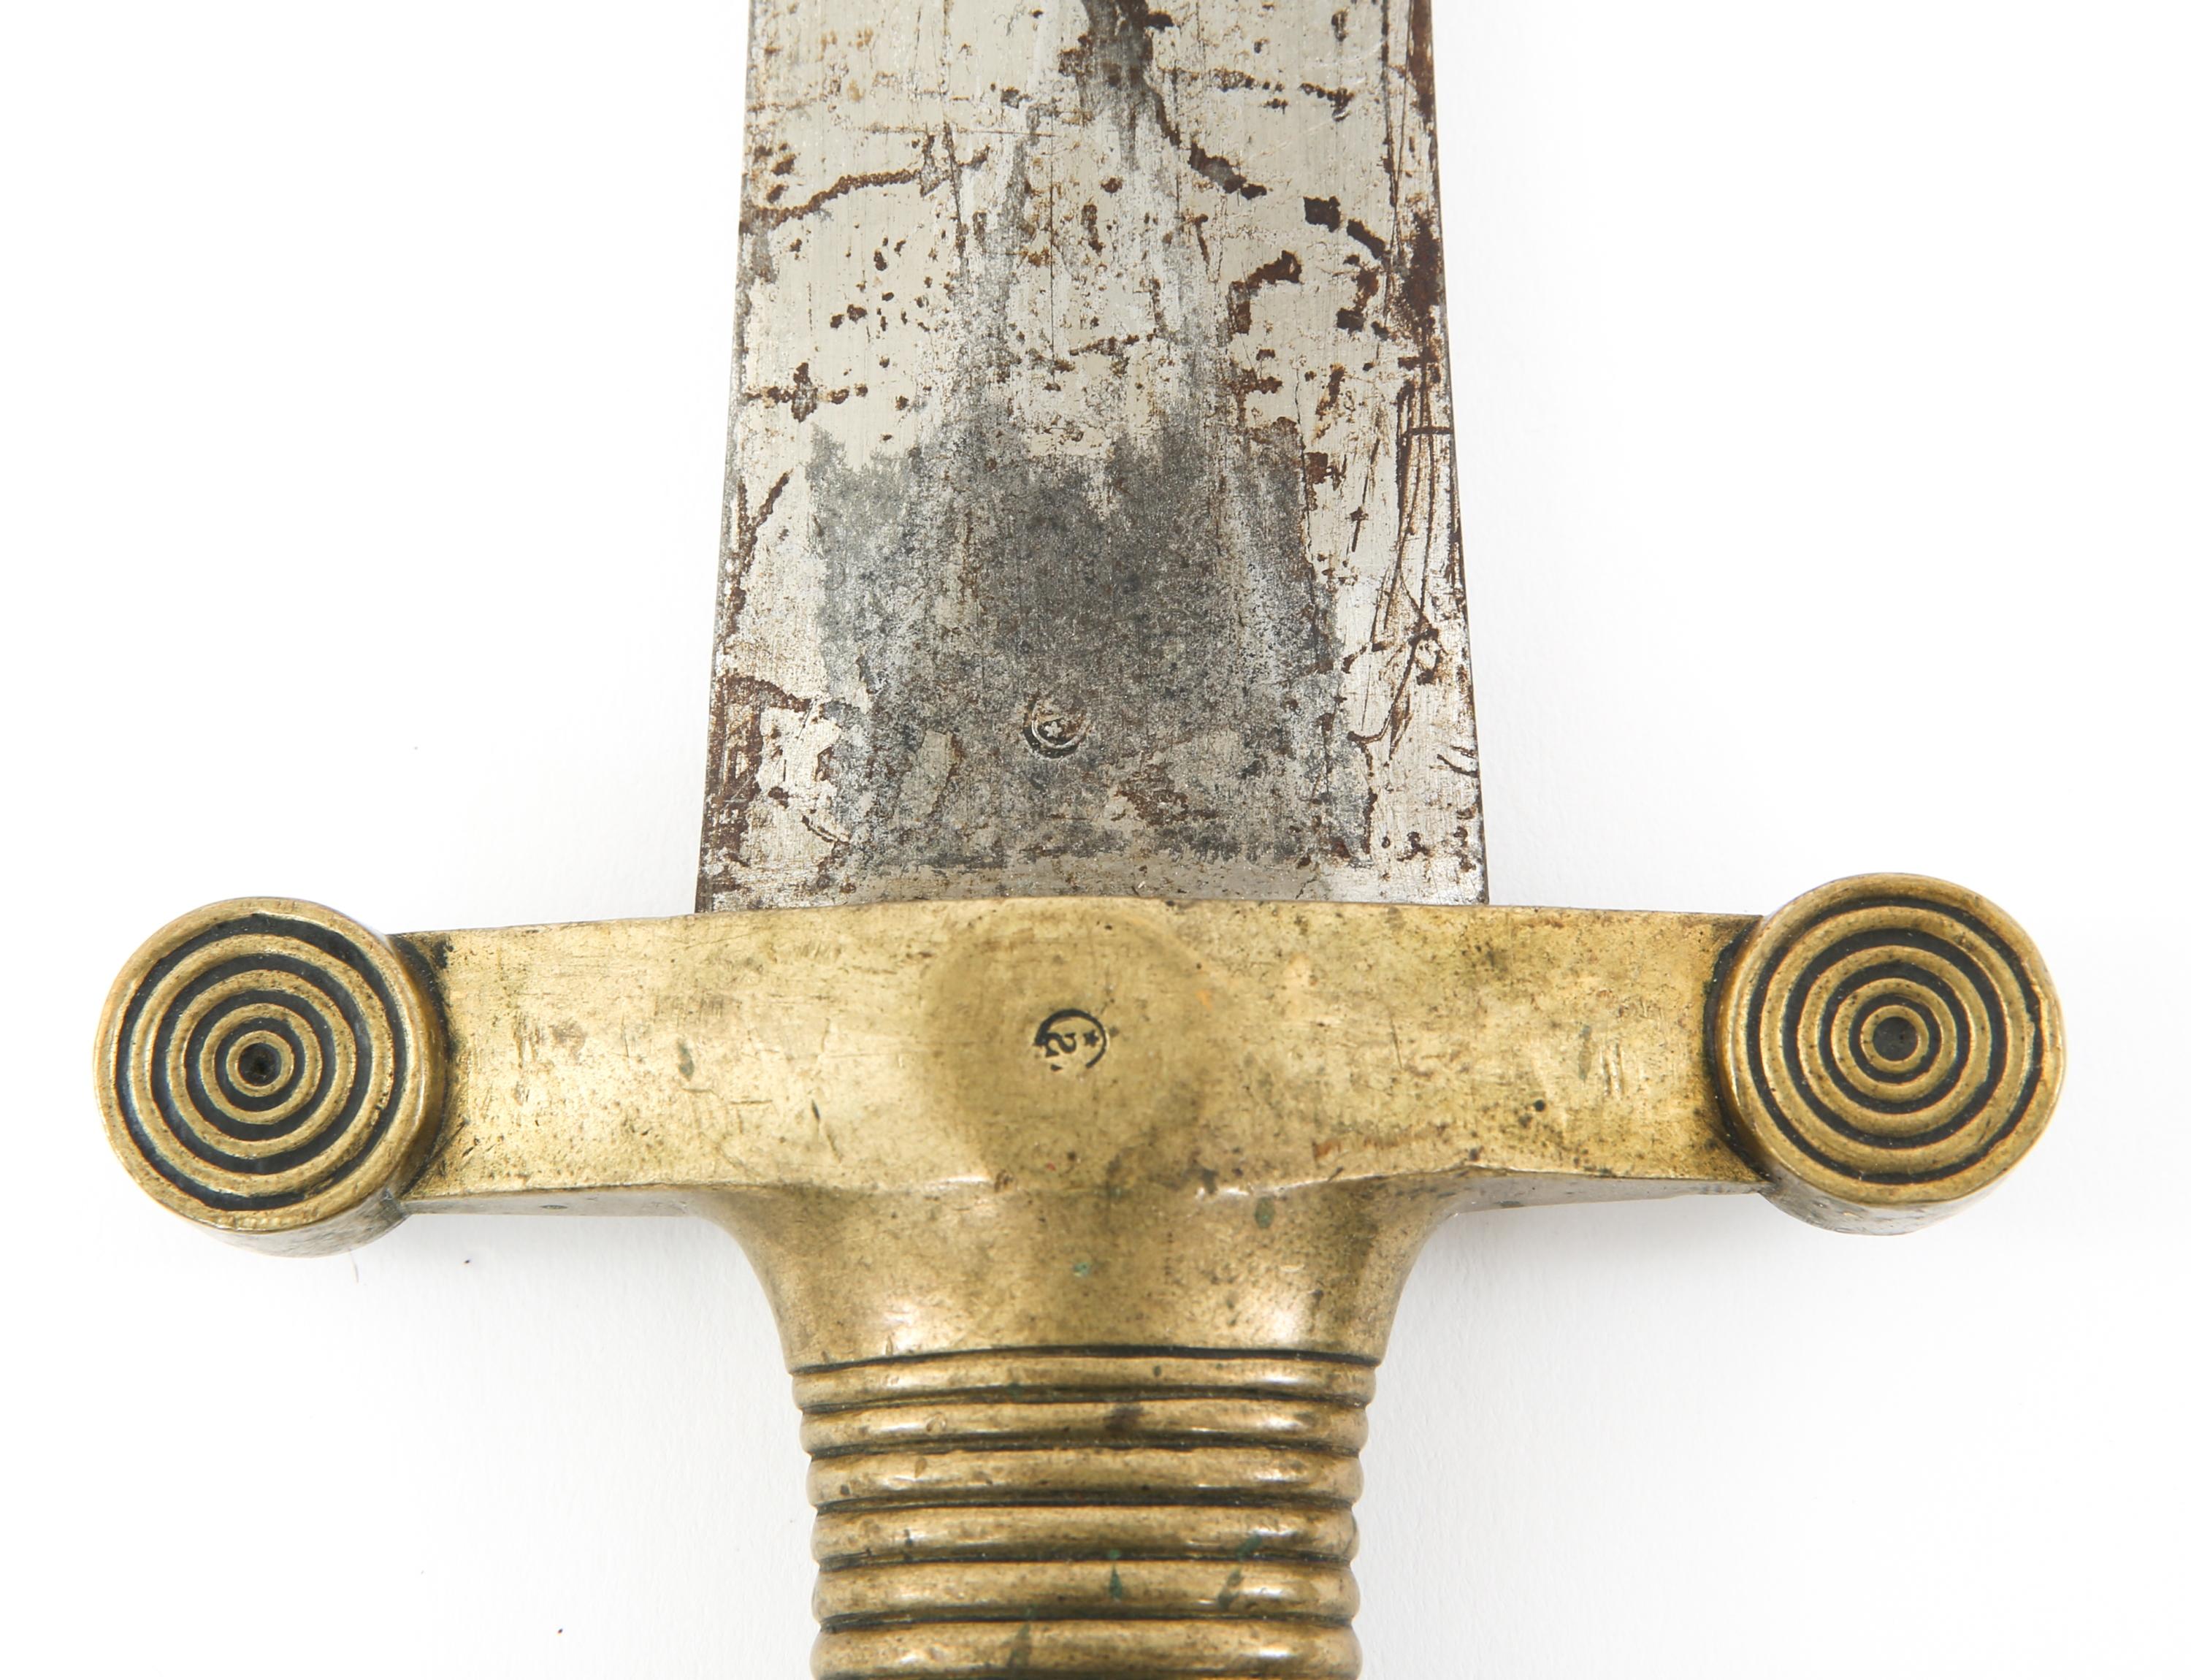 FRENCH MODEL 1831 FOOT ARTILLERY SWORD